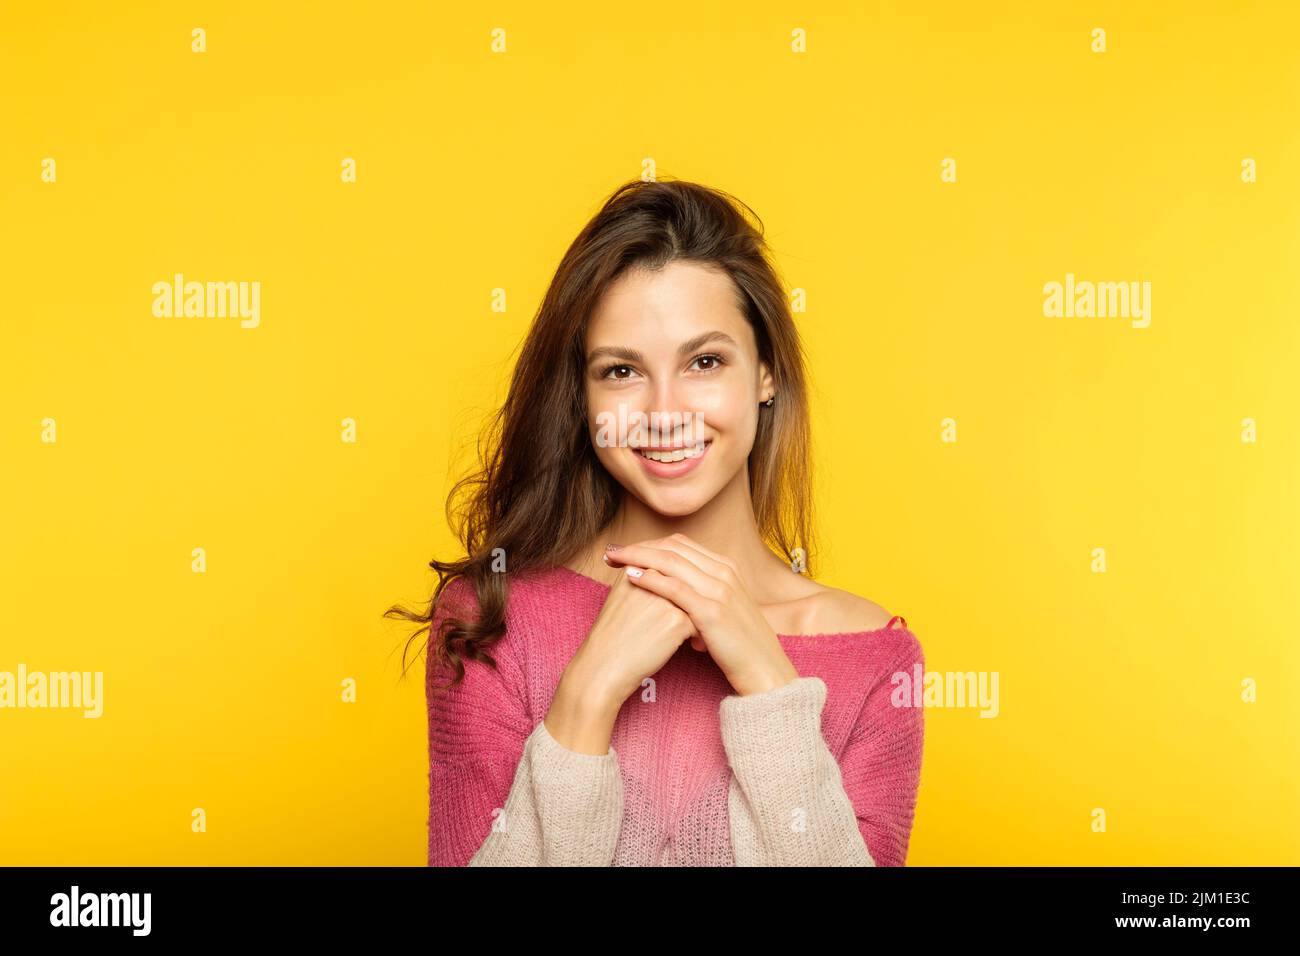 happy smiling joyful girl portrait face expression Stock Photo